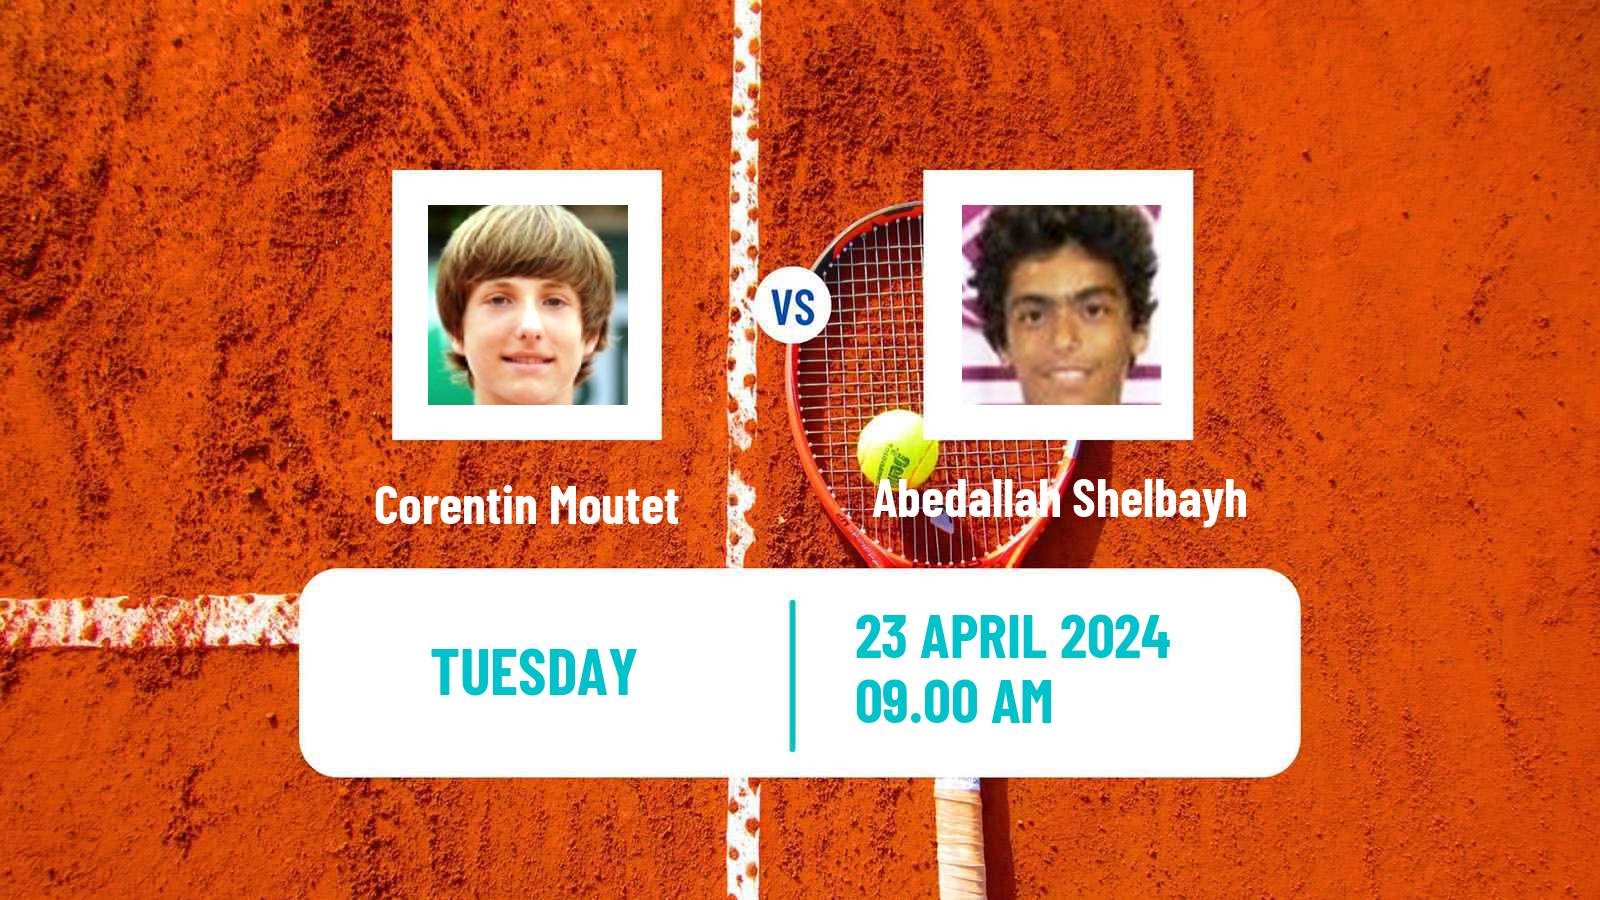 Tennis ATP Madrid Corentin Moutet - Abedallah Shelbayh